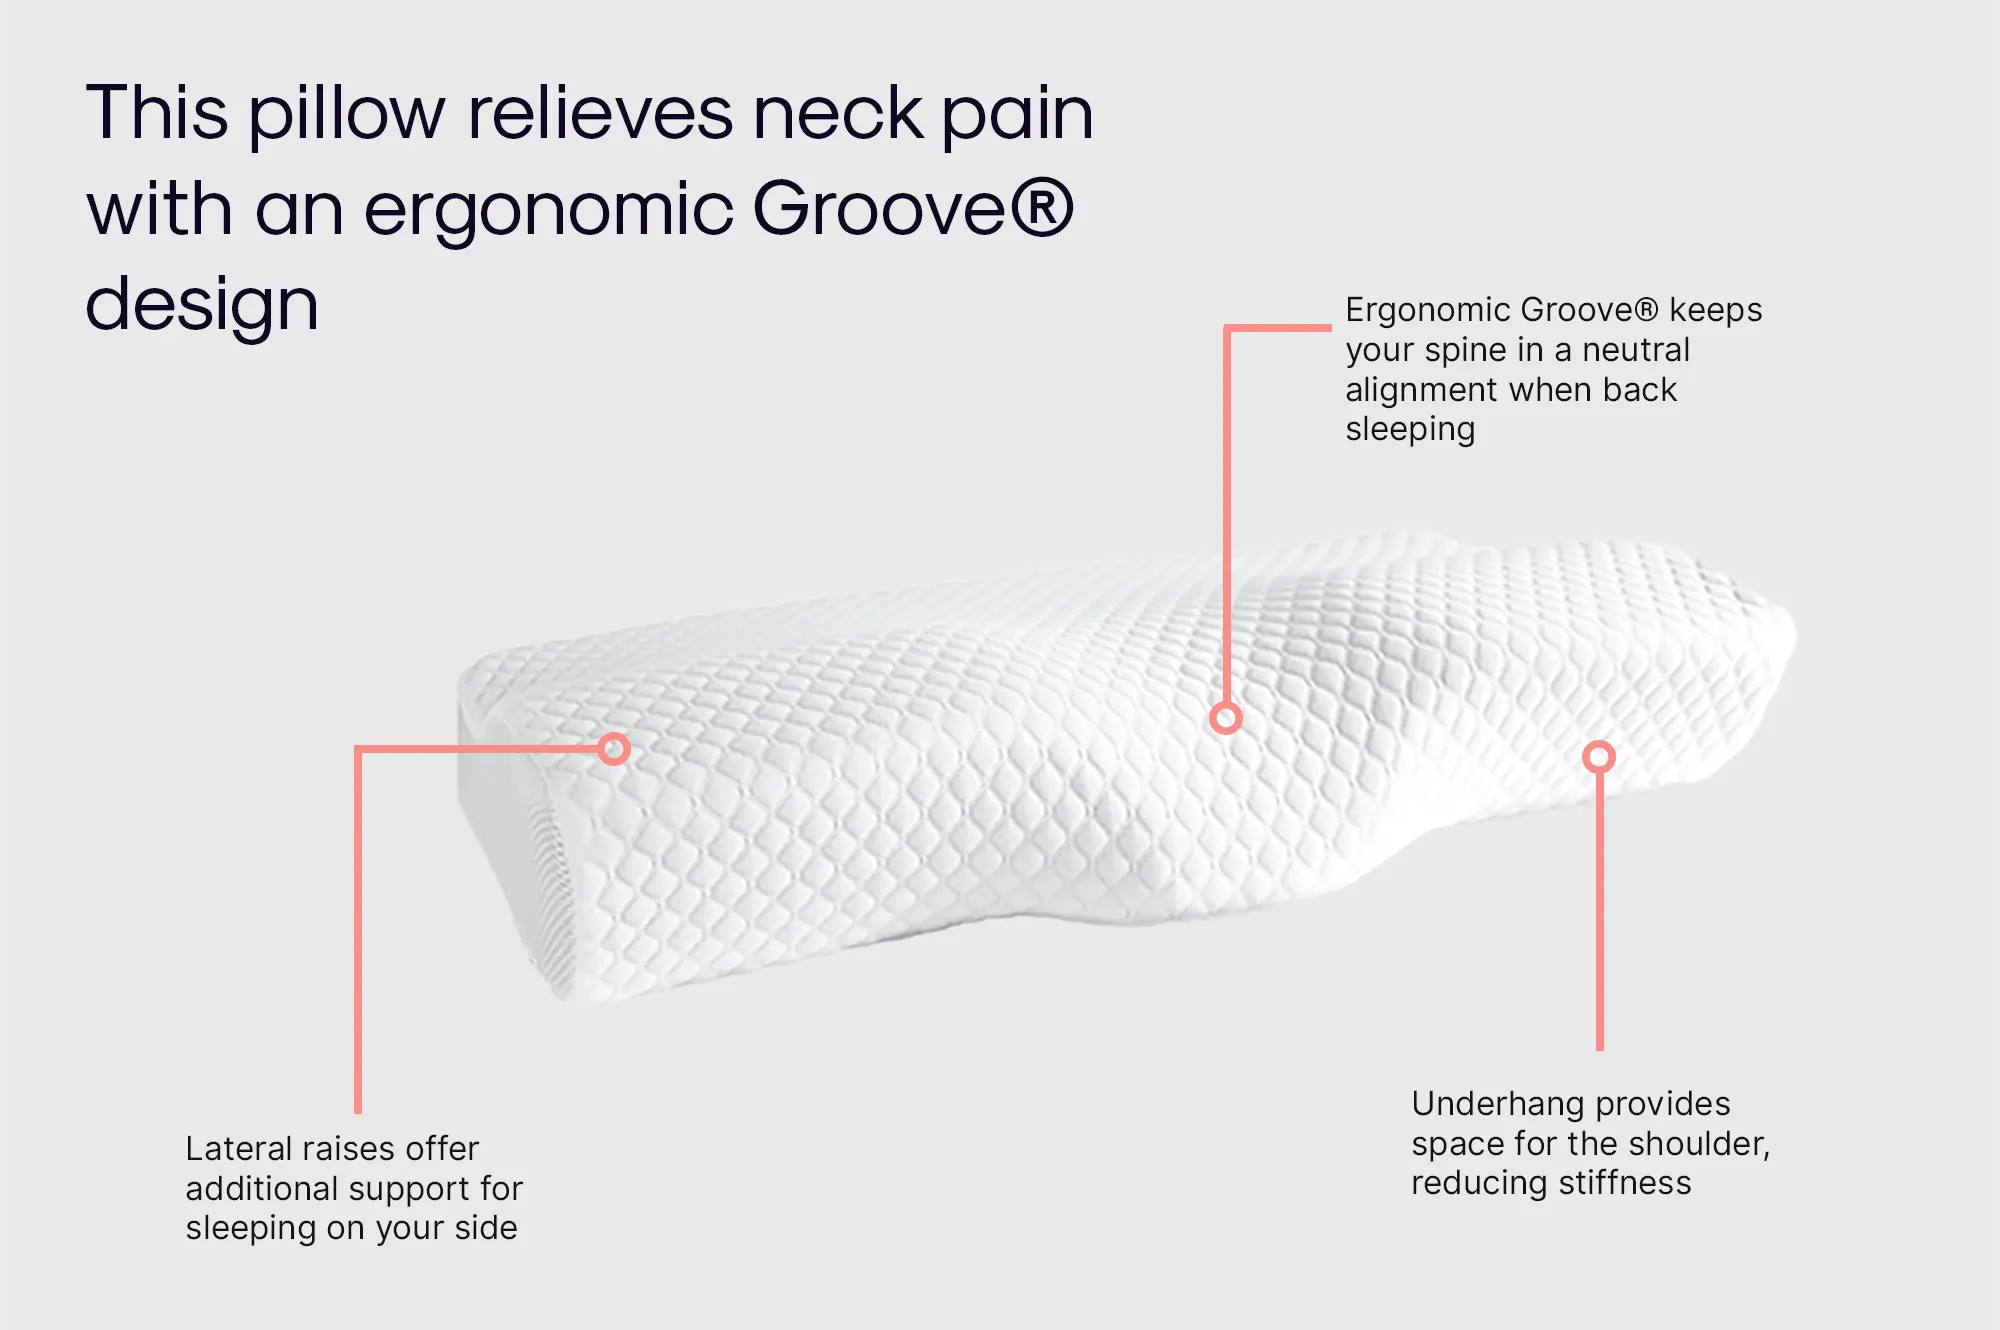 Diagram explaining sleeping benefits of the ergonomic Groove pillow design